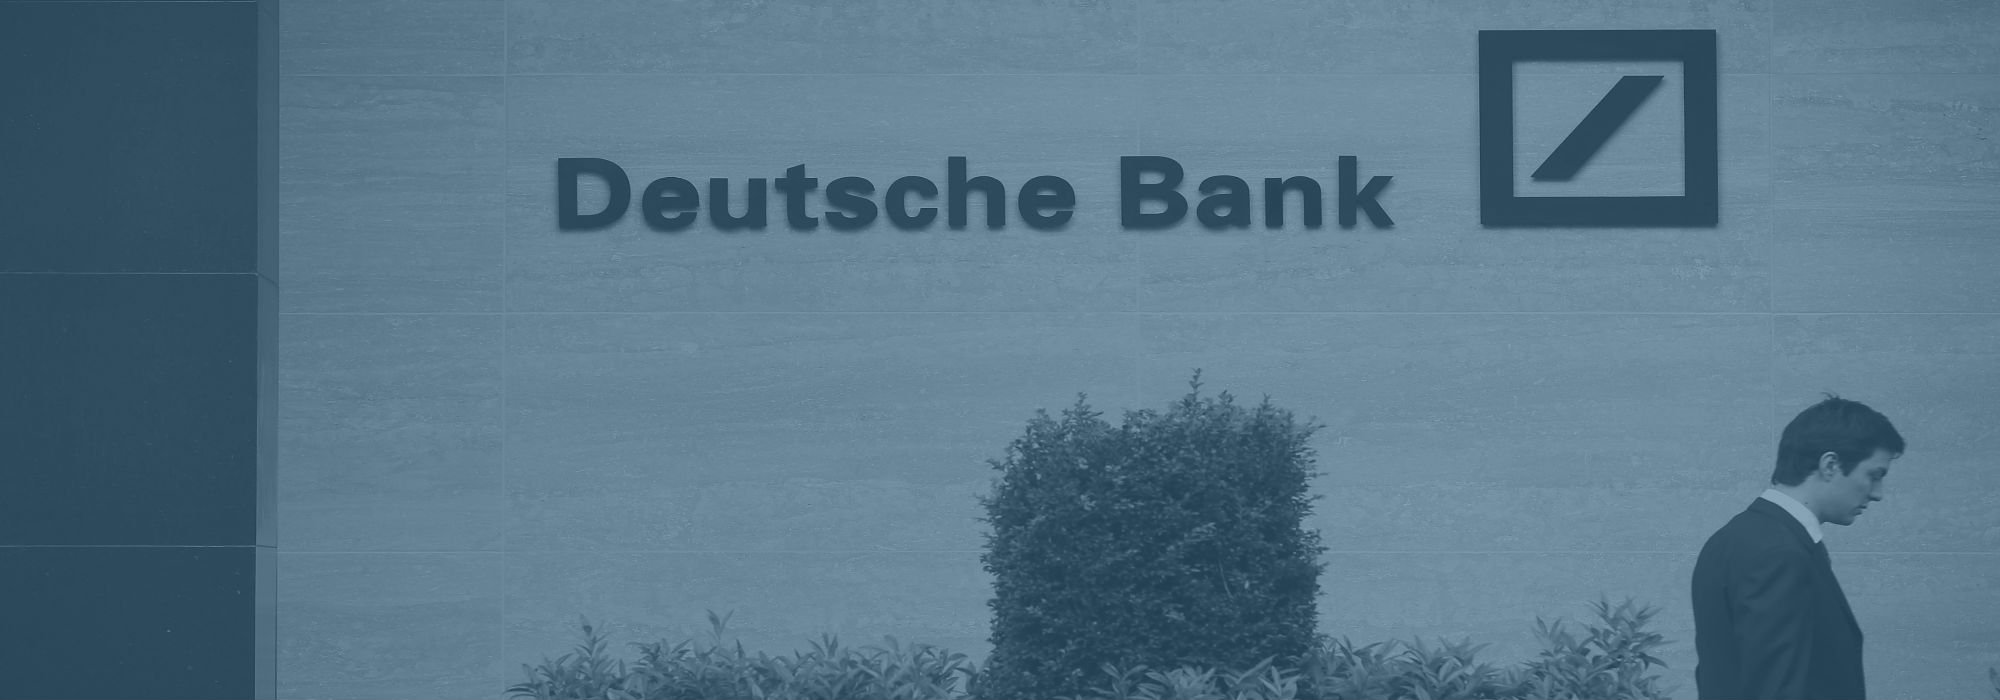 Deutsche Bank Announces 2016 Financial Results